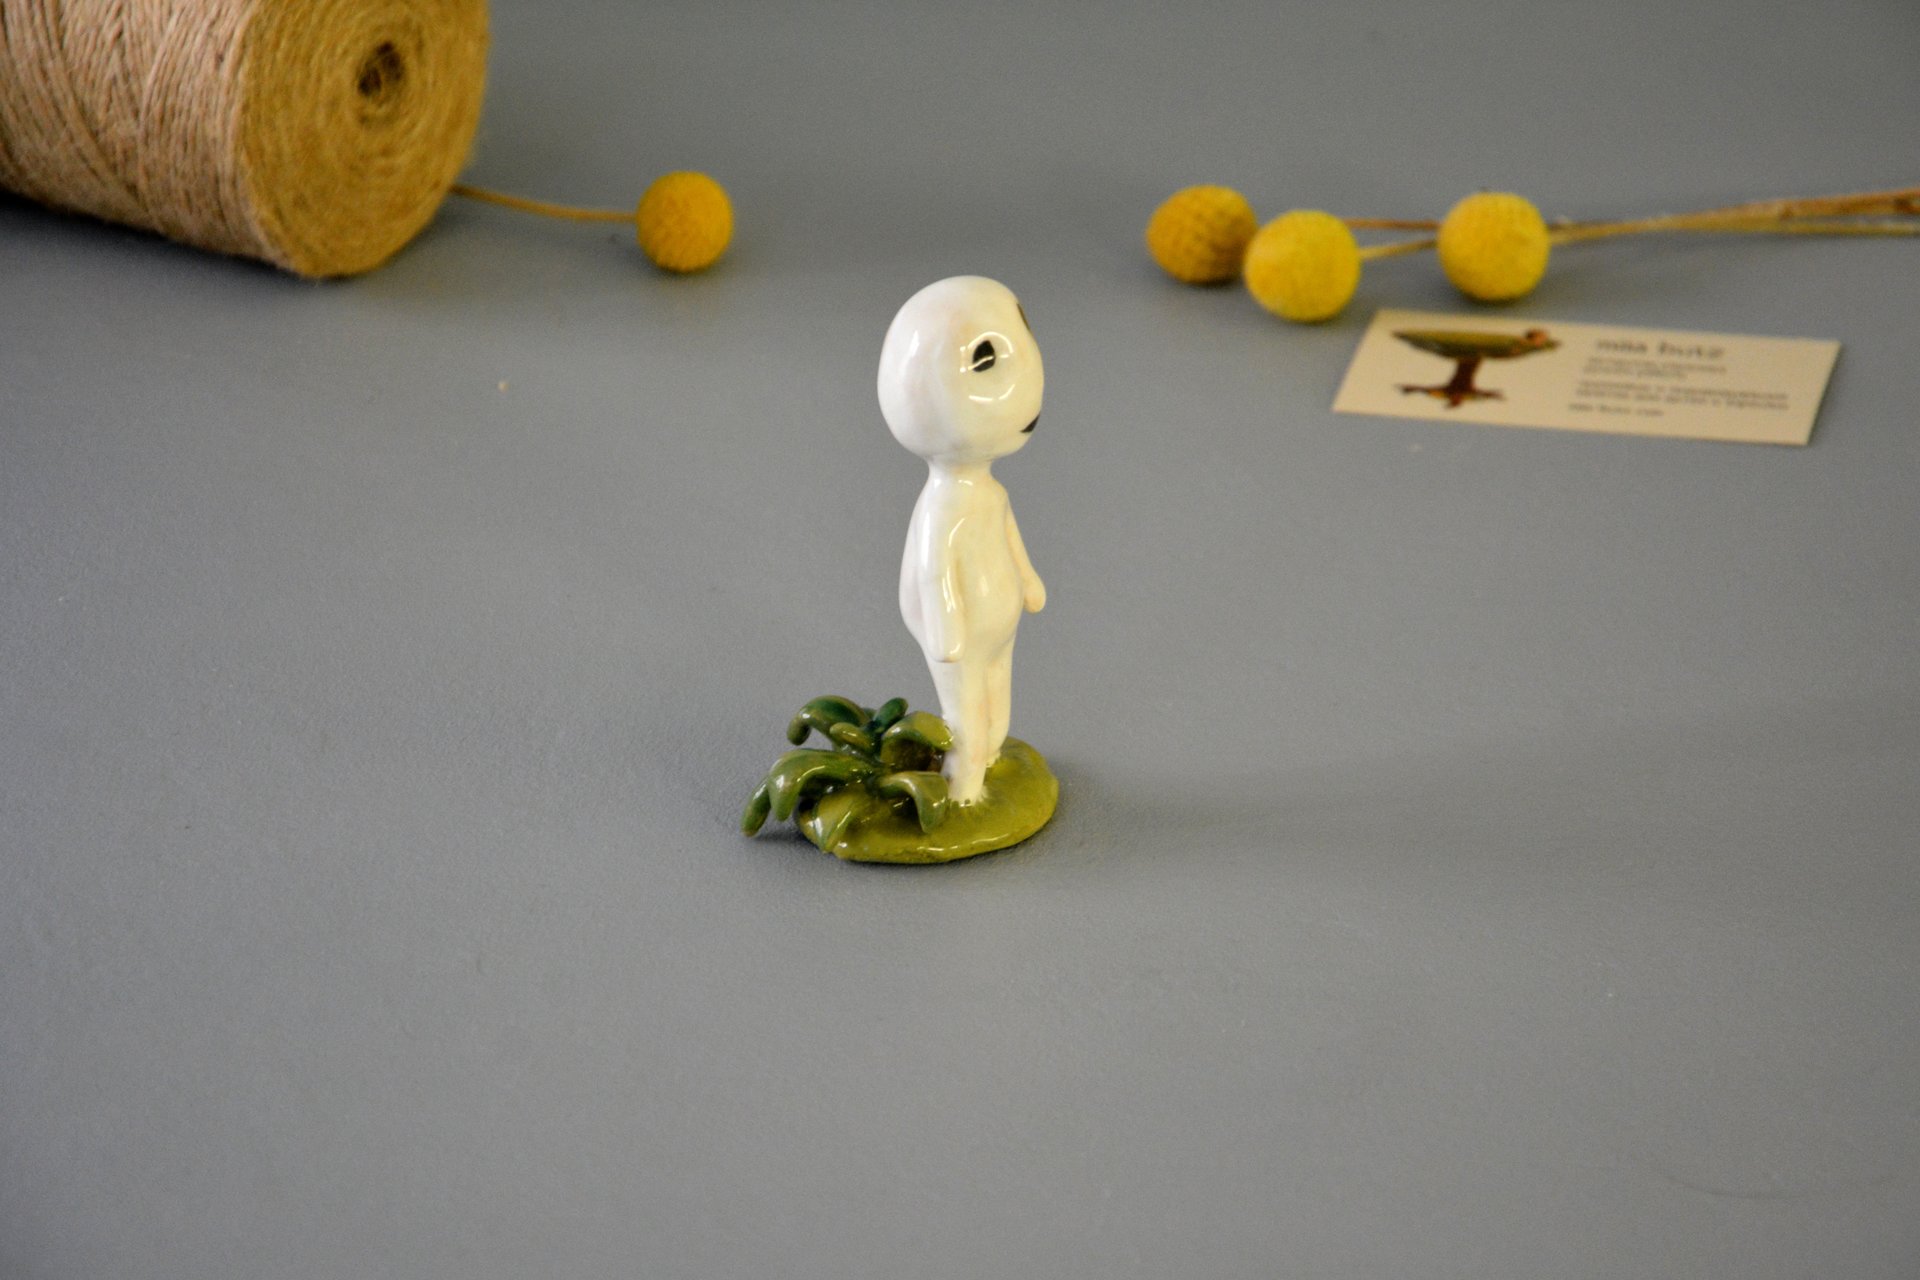 A figurine of a smiling Kodama tree spirit, height - 9.5 cm, photo 6 of 7.